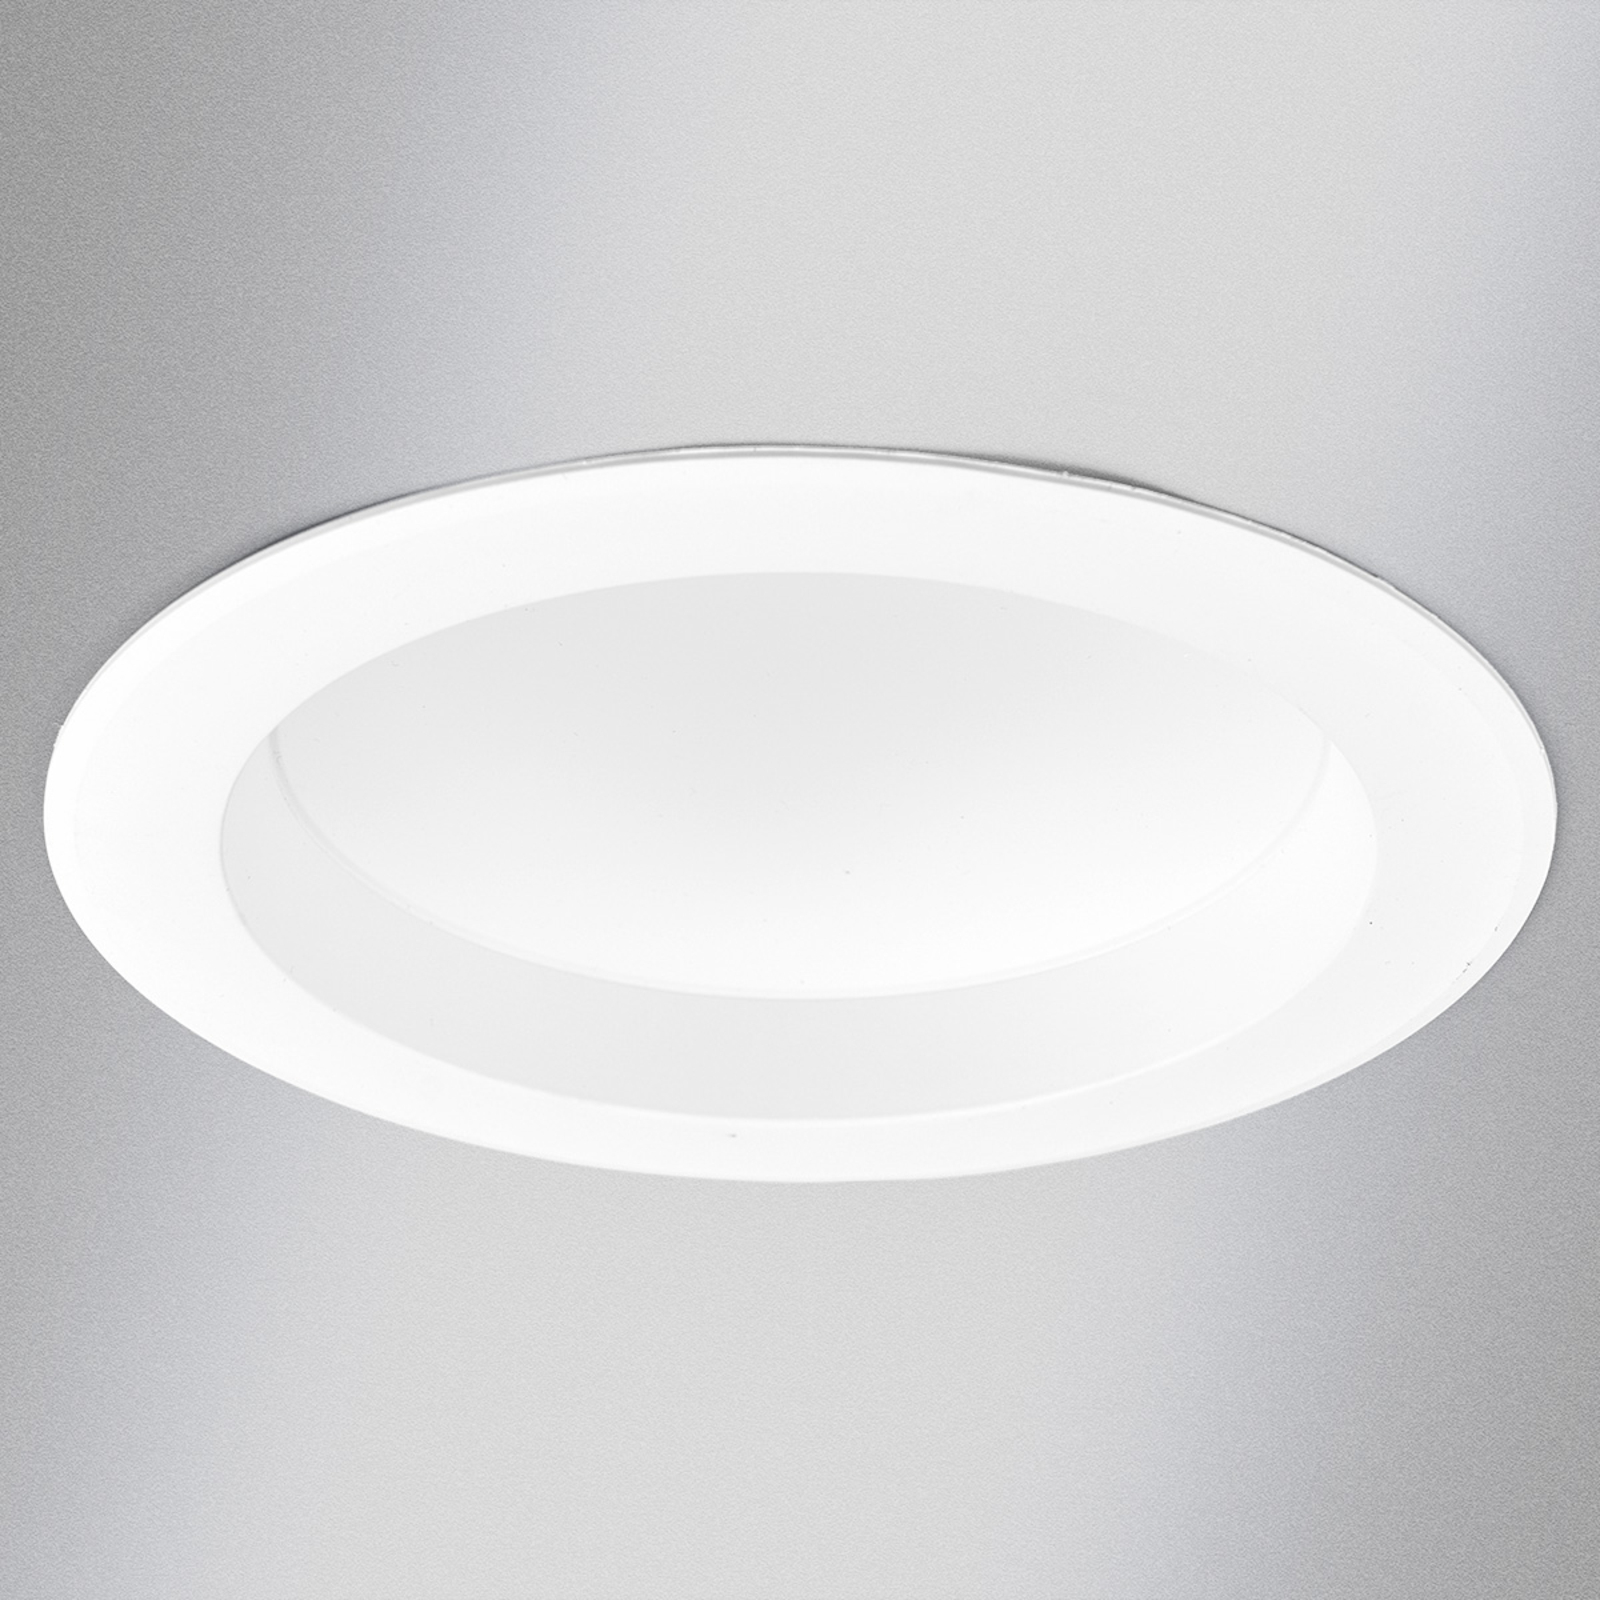 Jasné LED Downlight Arian, 17,4 cm 15 W